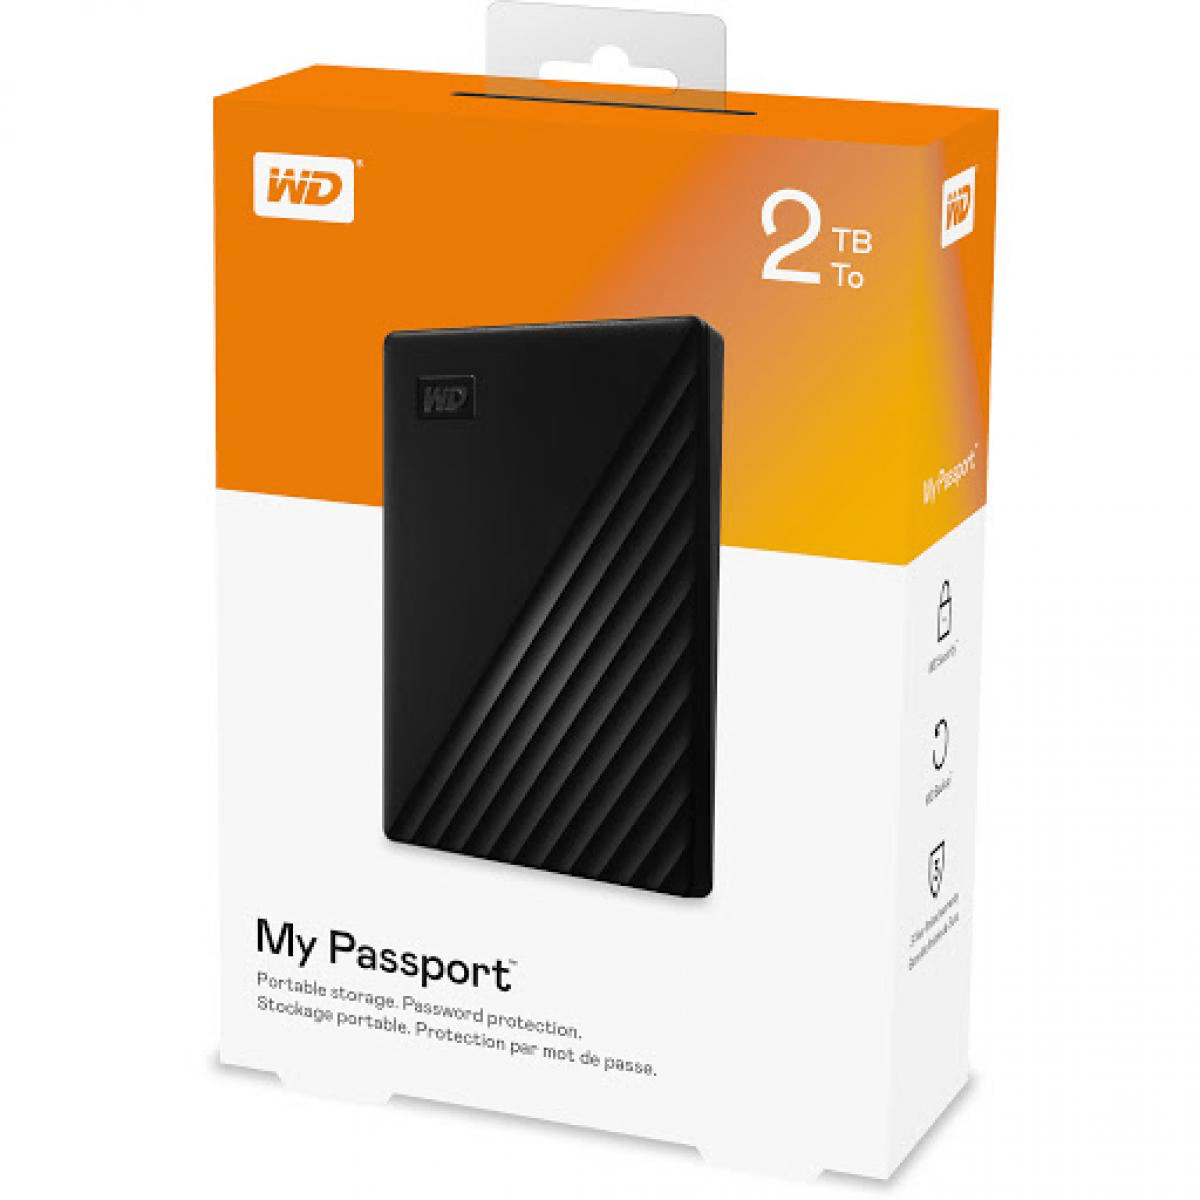 WD WD 2TB My Passport Portable External Hard Drive - Black